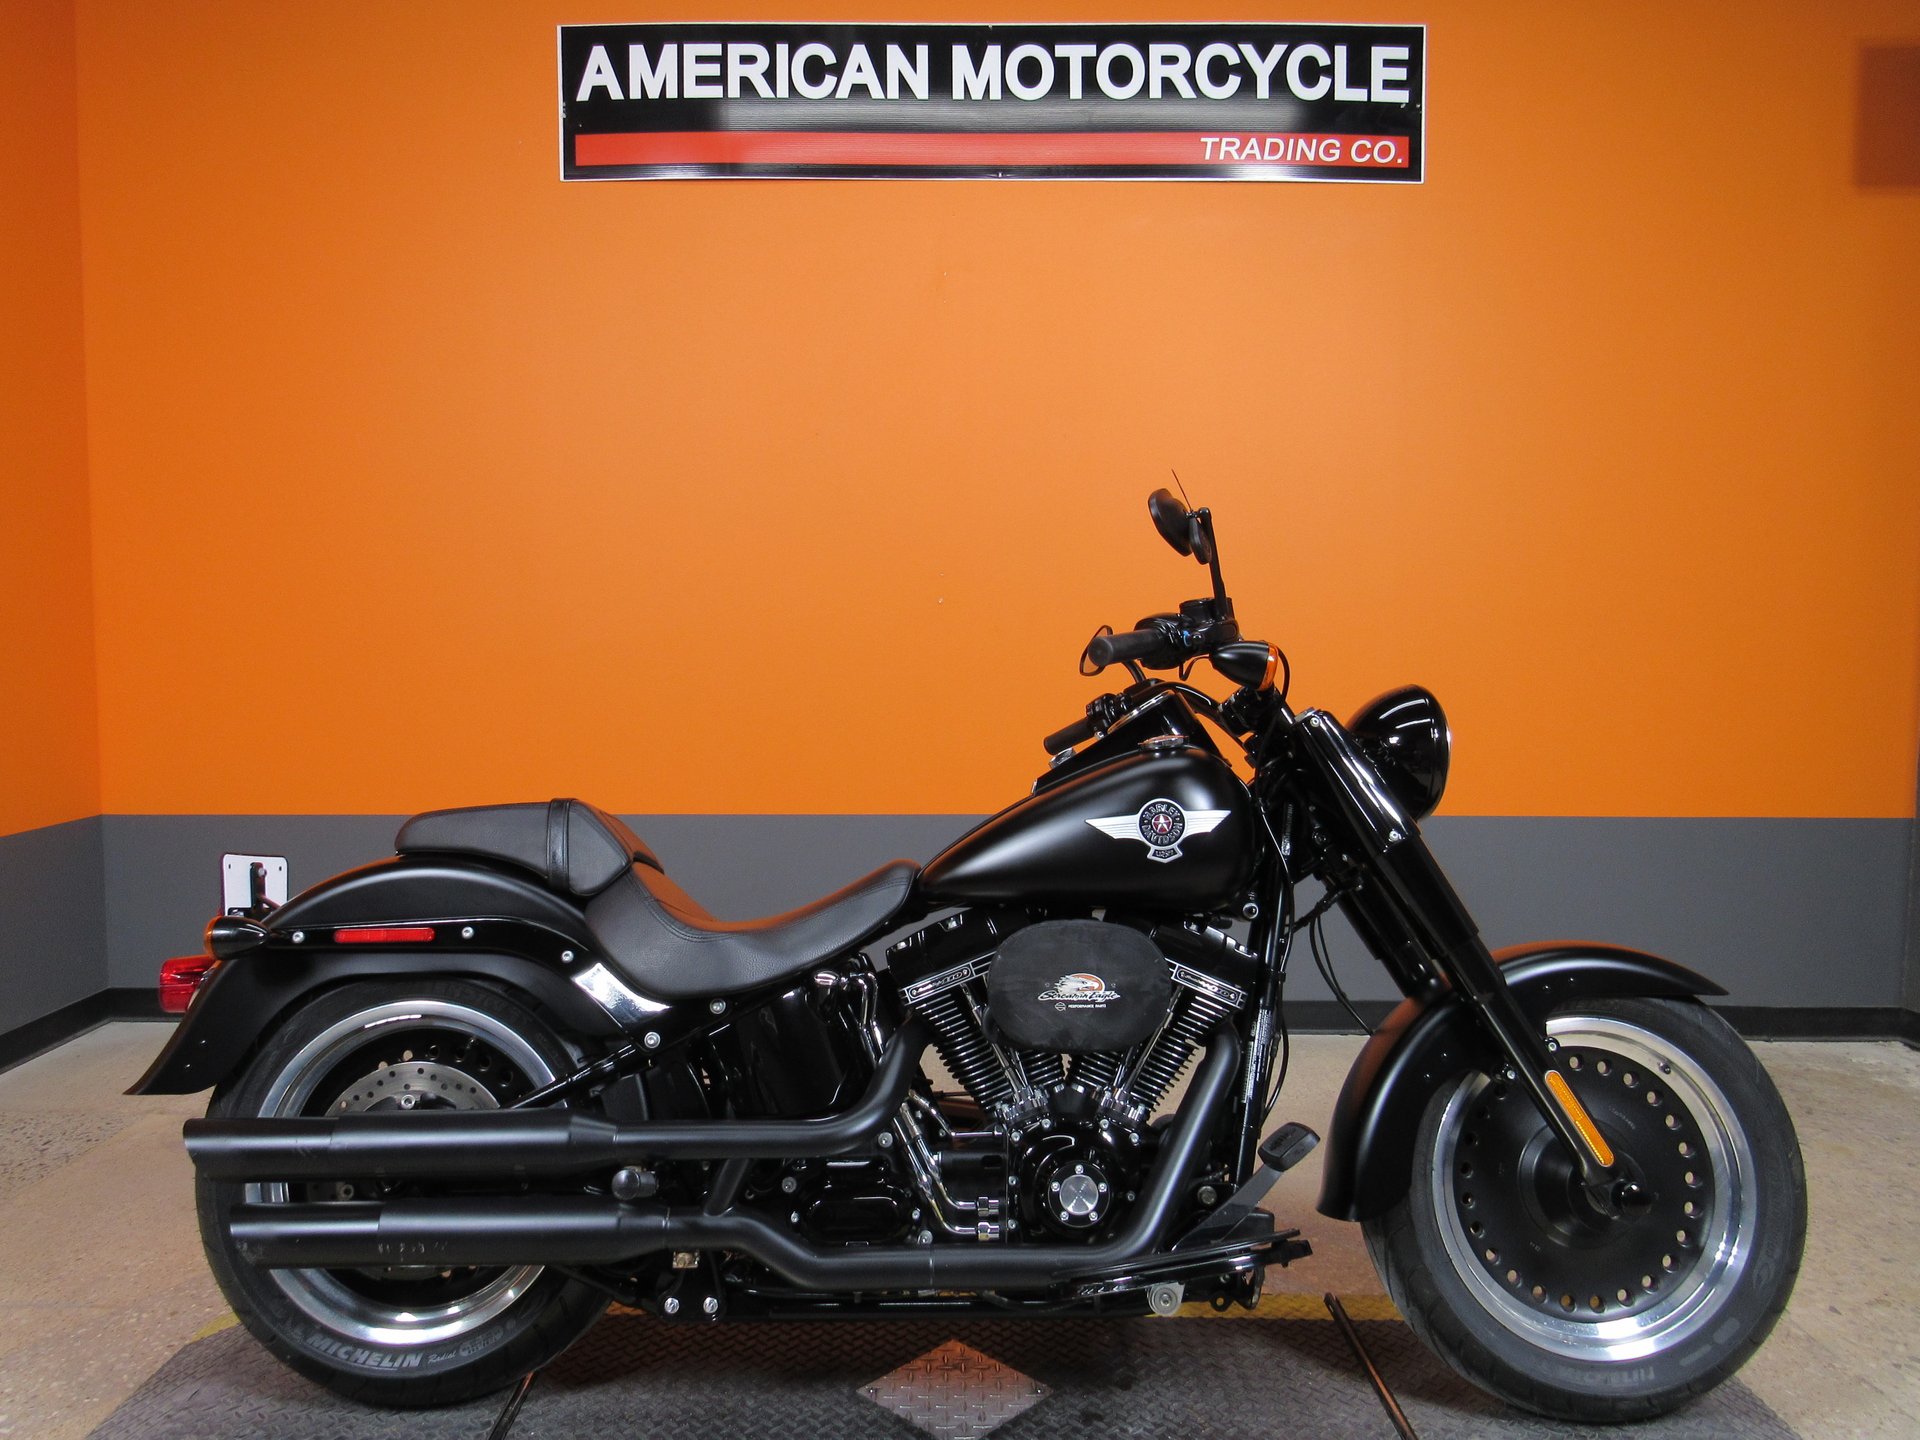 17 Harley Davidson Softail Fat Boy American Motorcycle Trading Company Used Harley Davidson Motorcycles